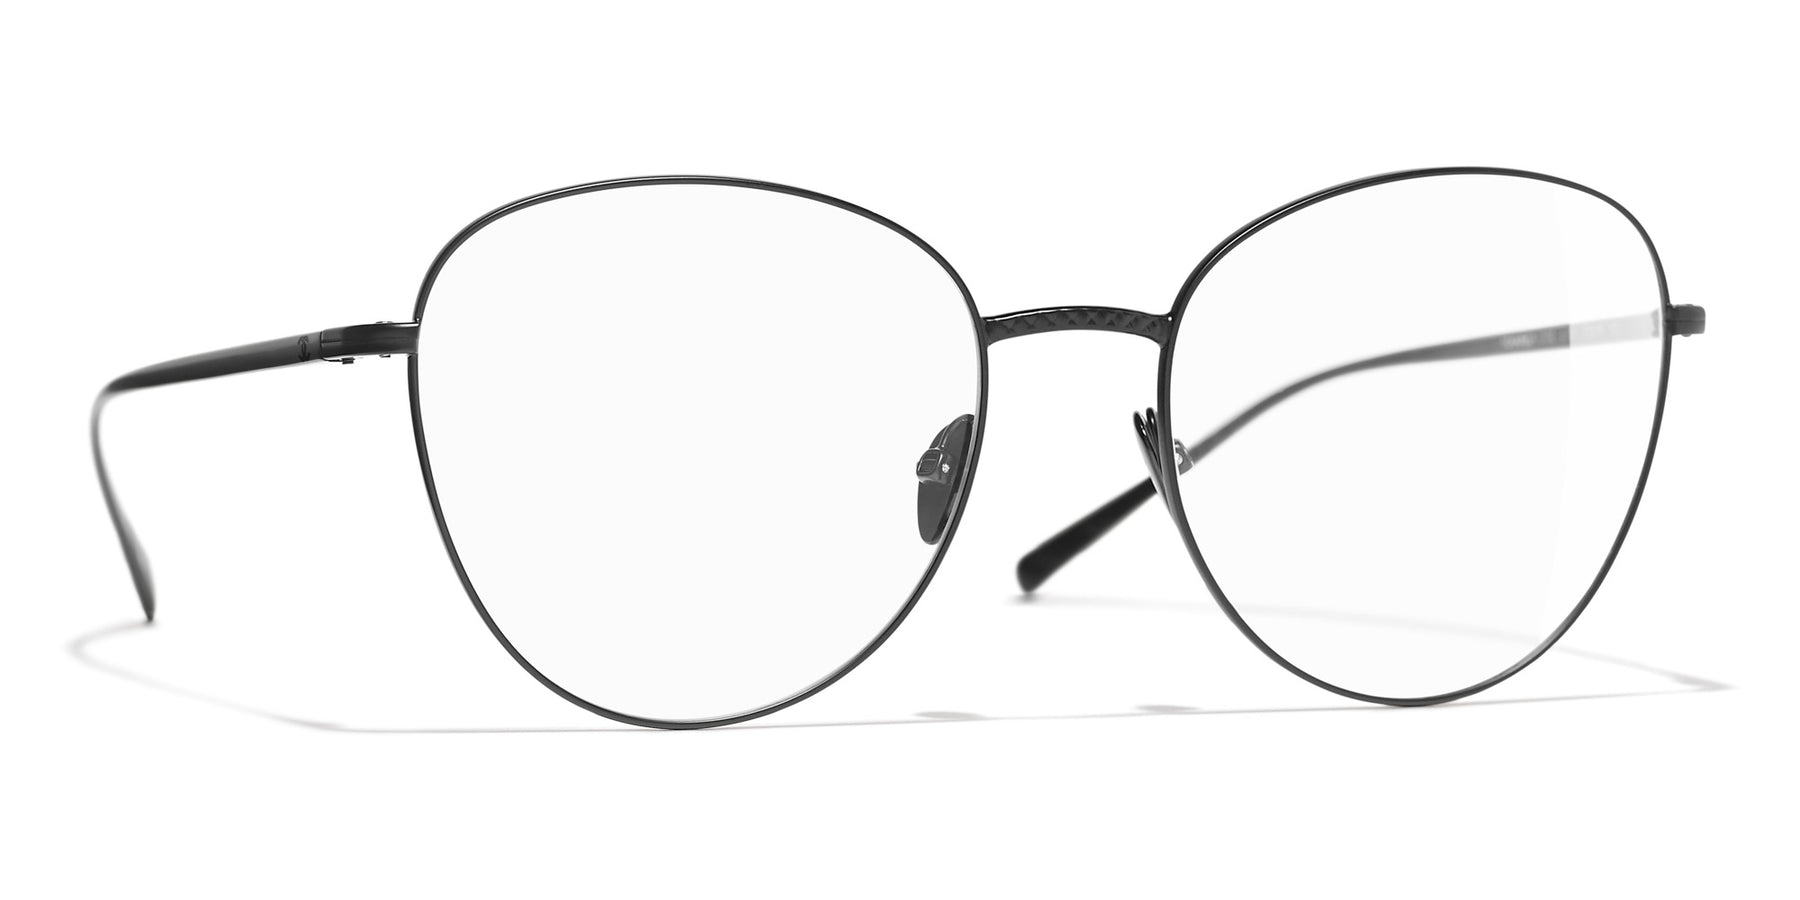 Chanel Round Eyeglasses - Metal, Gold - UV Protected - Women's Sunglasses - 2186 C395